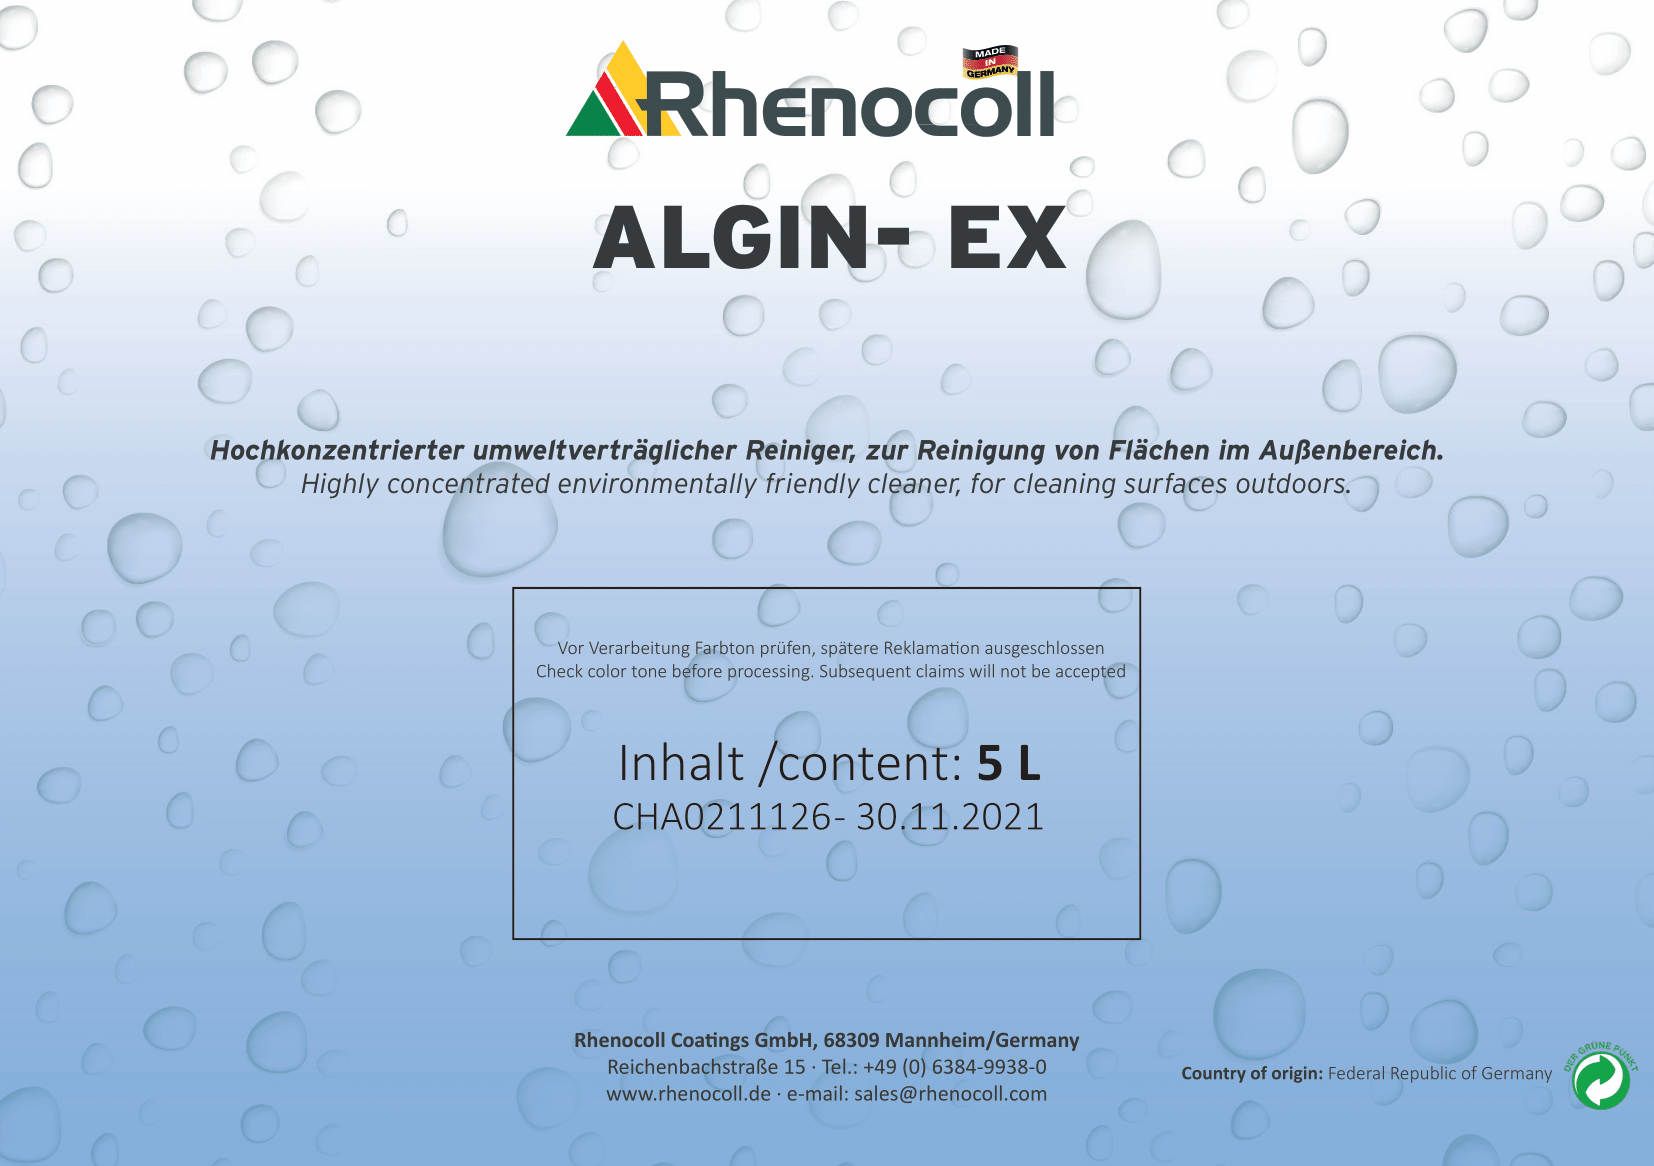 Rhenocoll ALGIN- EX